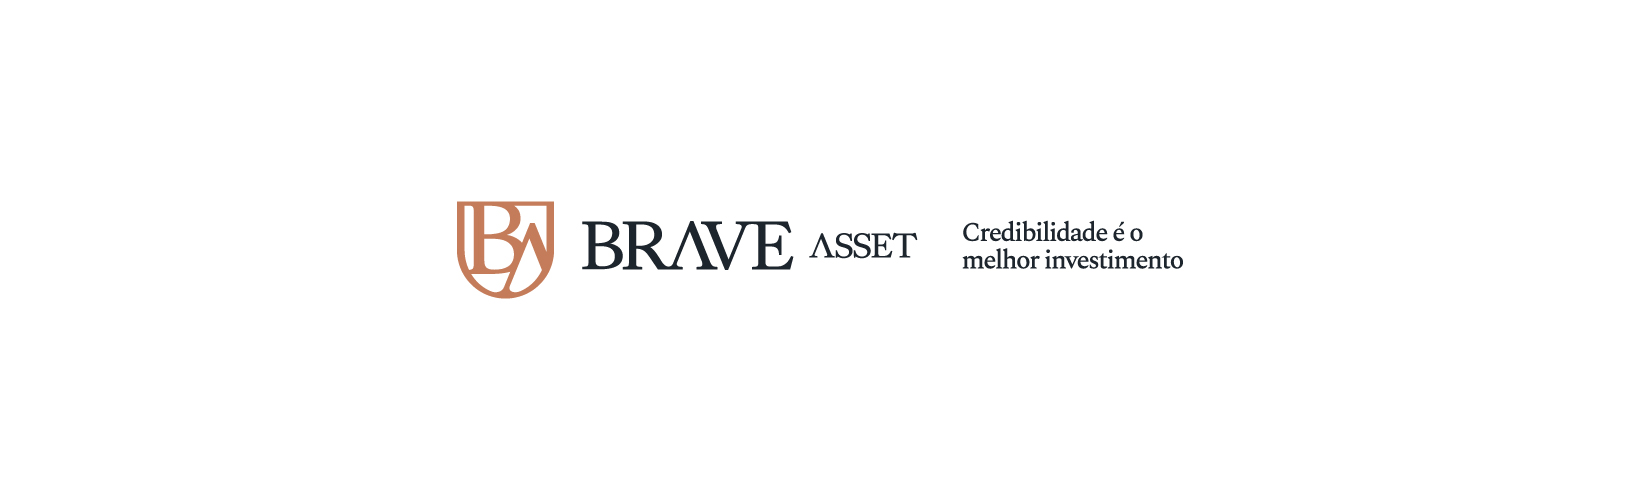 Brave Asset Logotipo